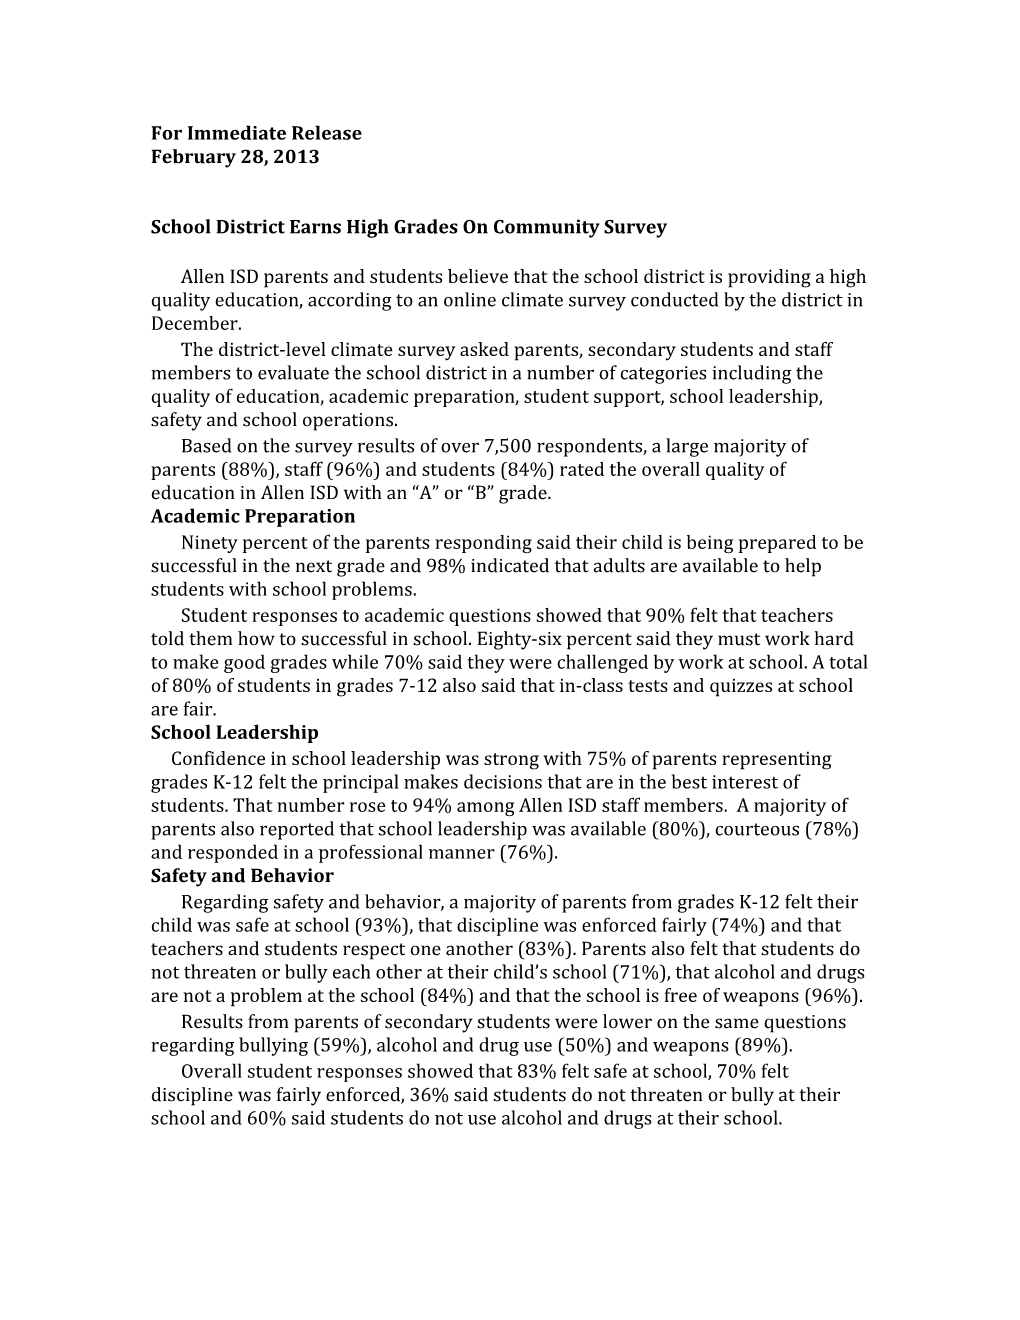 School District Earns High Grades on Community Survey